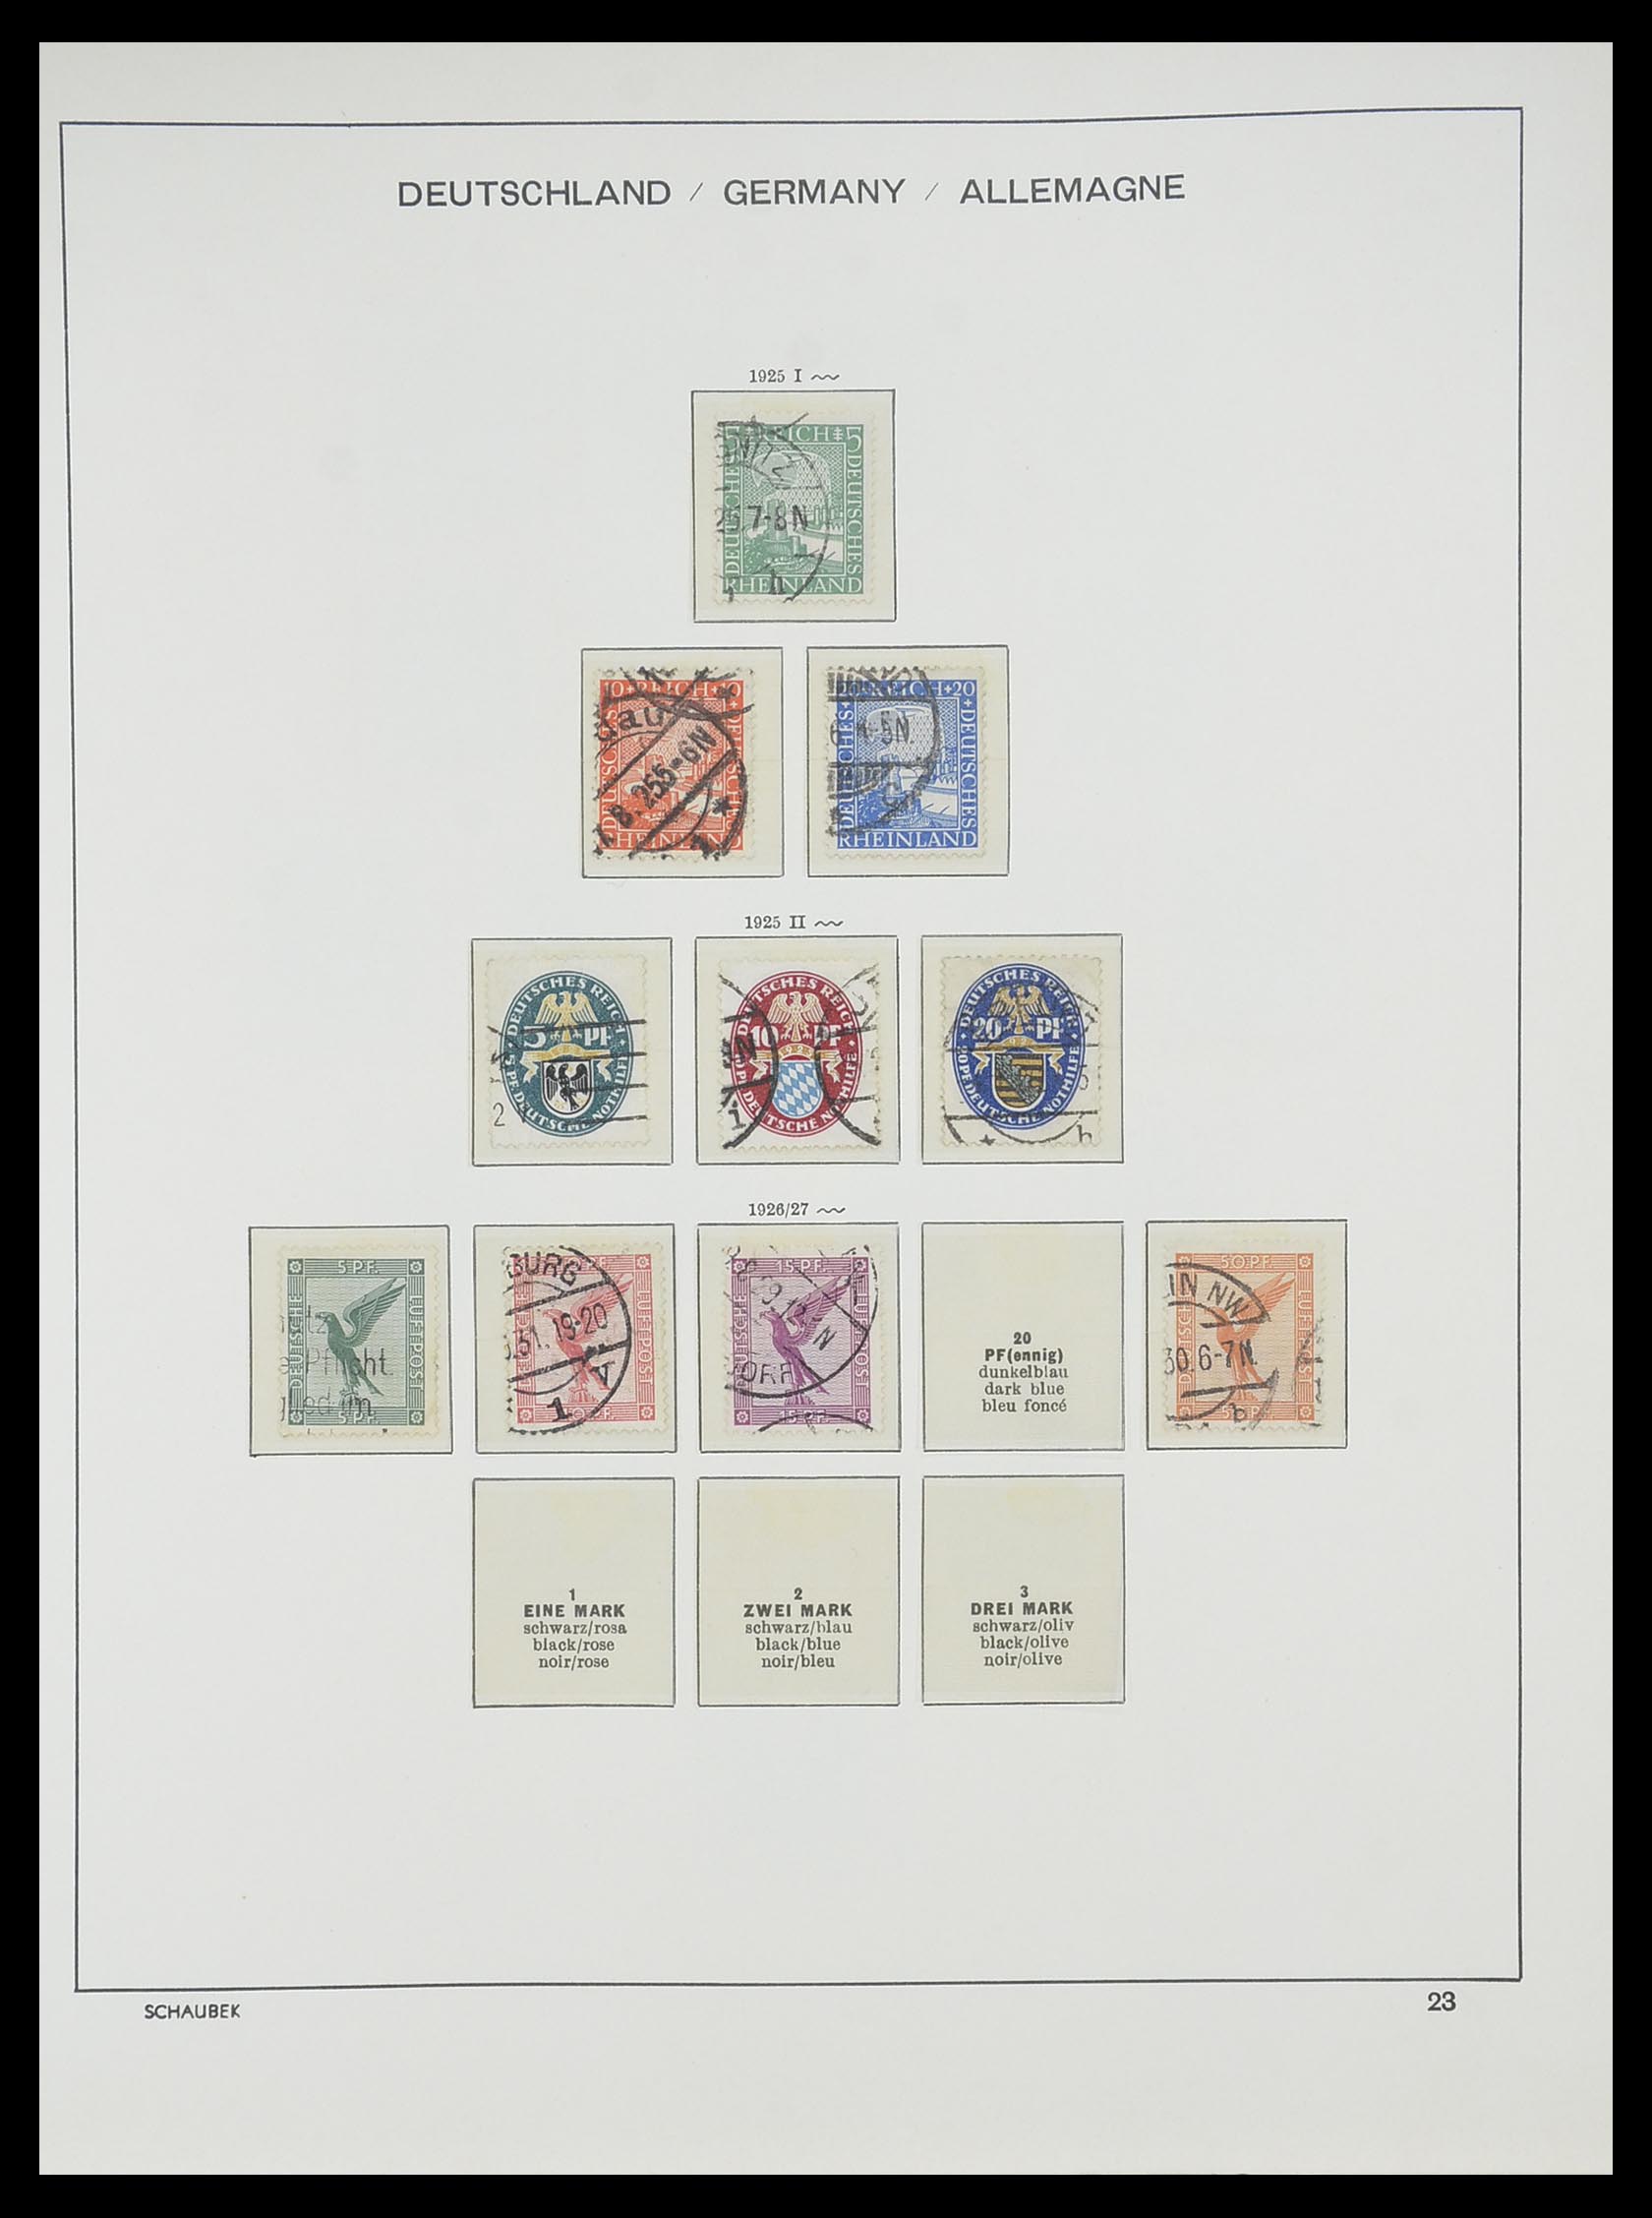 33697 023 - Stamp collection 33697 German Reich 1872-1945.